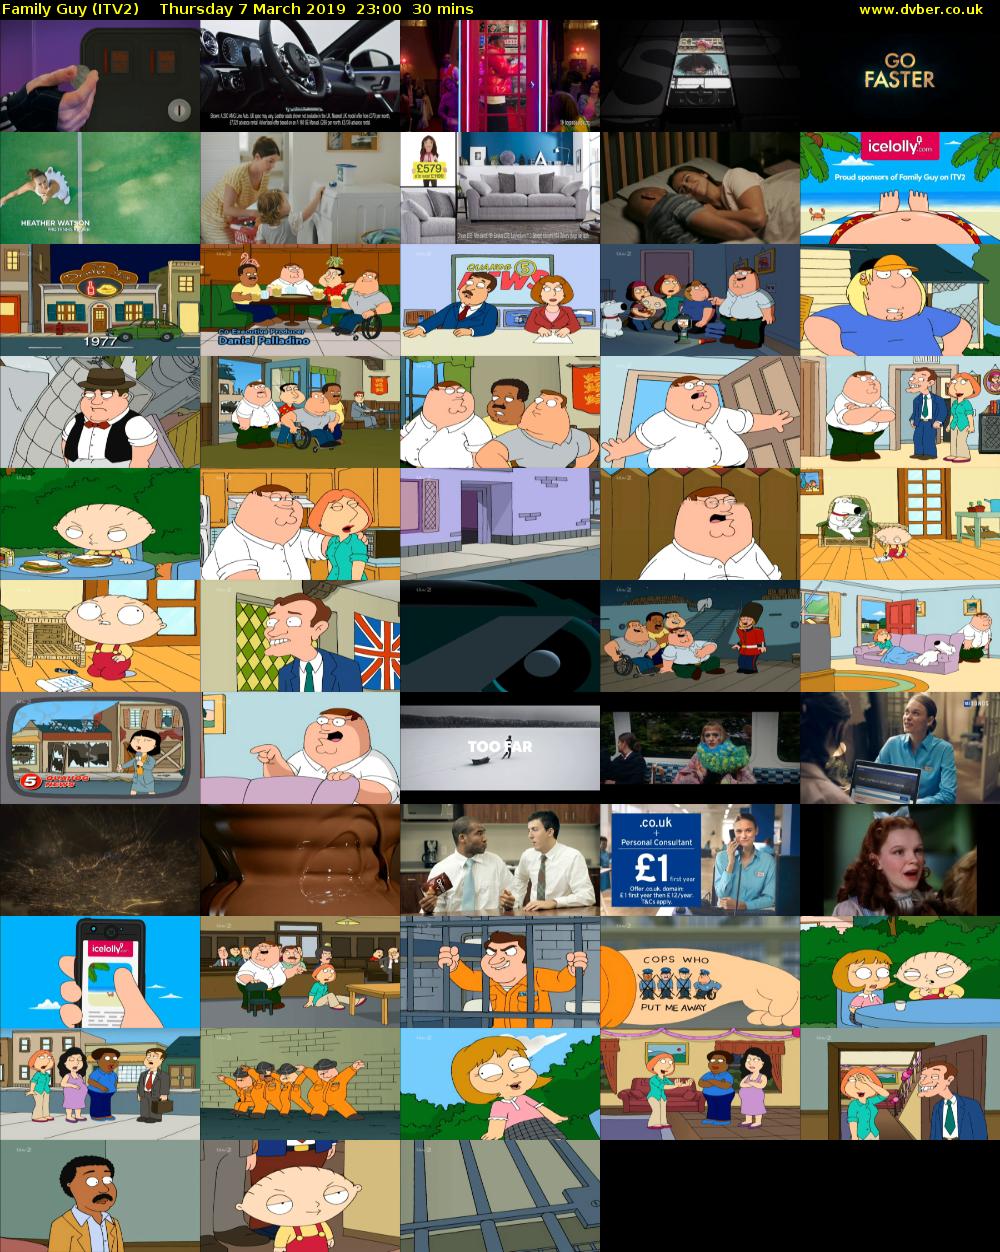 Family Guy (ITV2) Thursday 7 March 2019 23:00 - 23:30